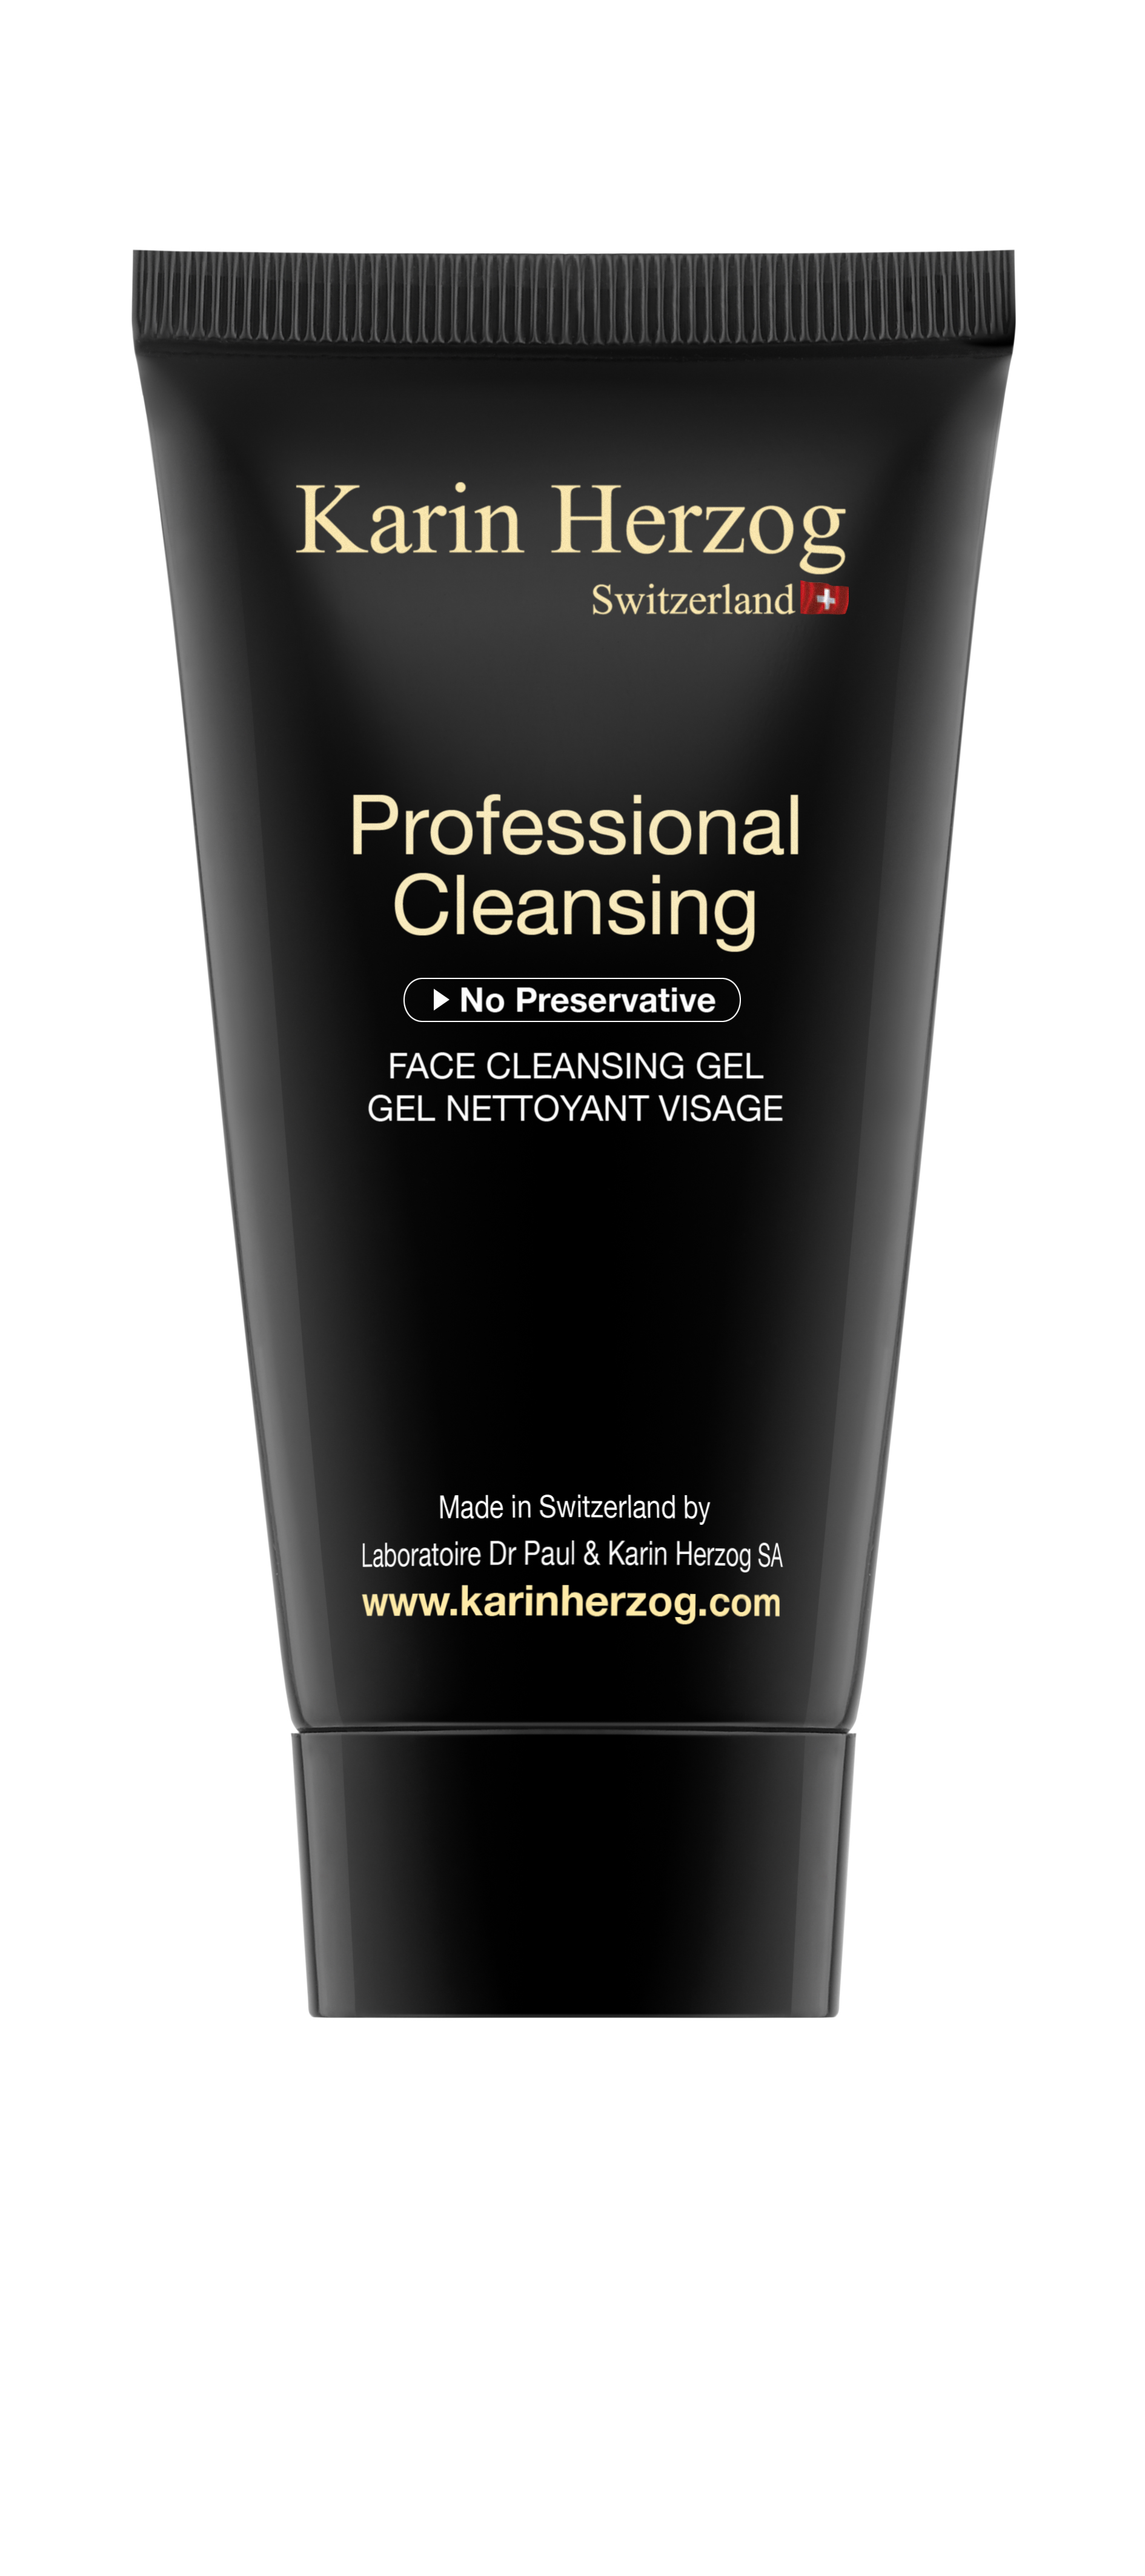 Karin Herzog Professional Cleansing Cream 50ml